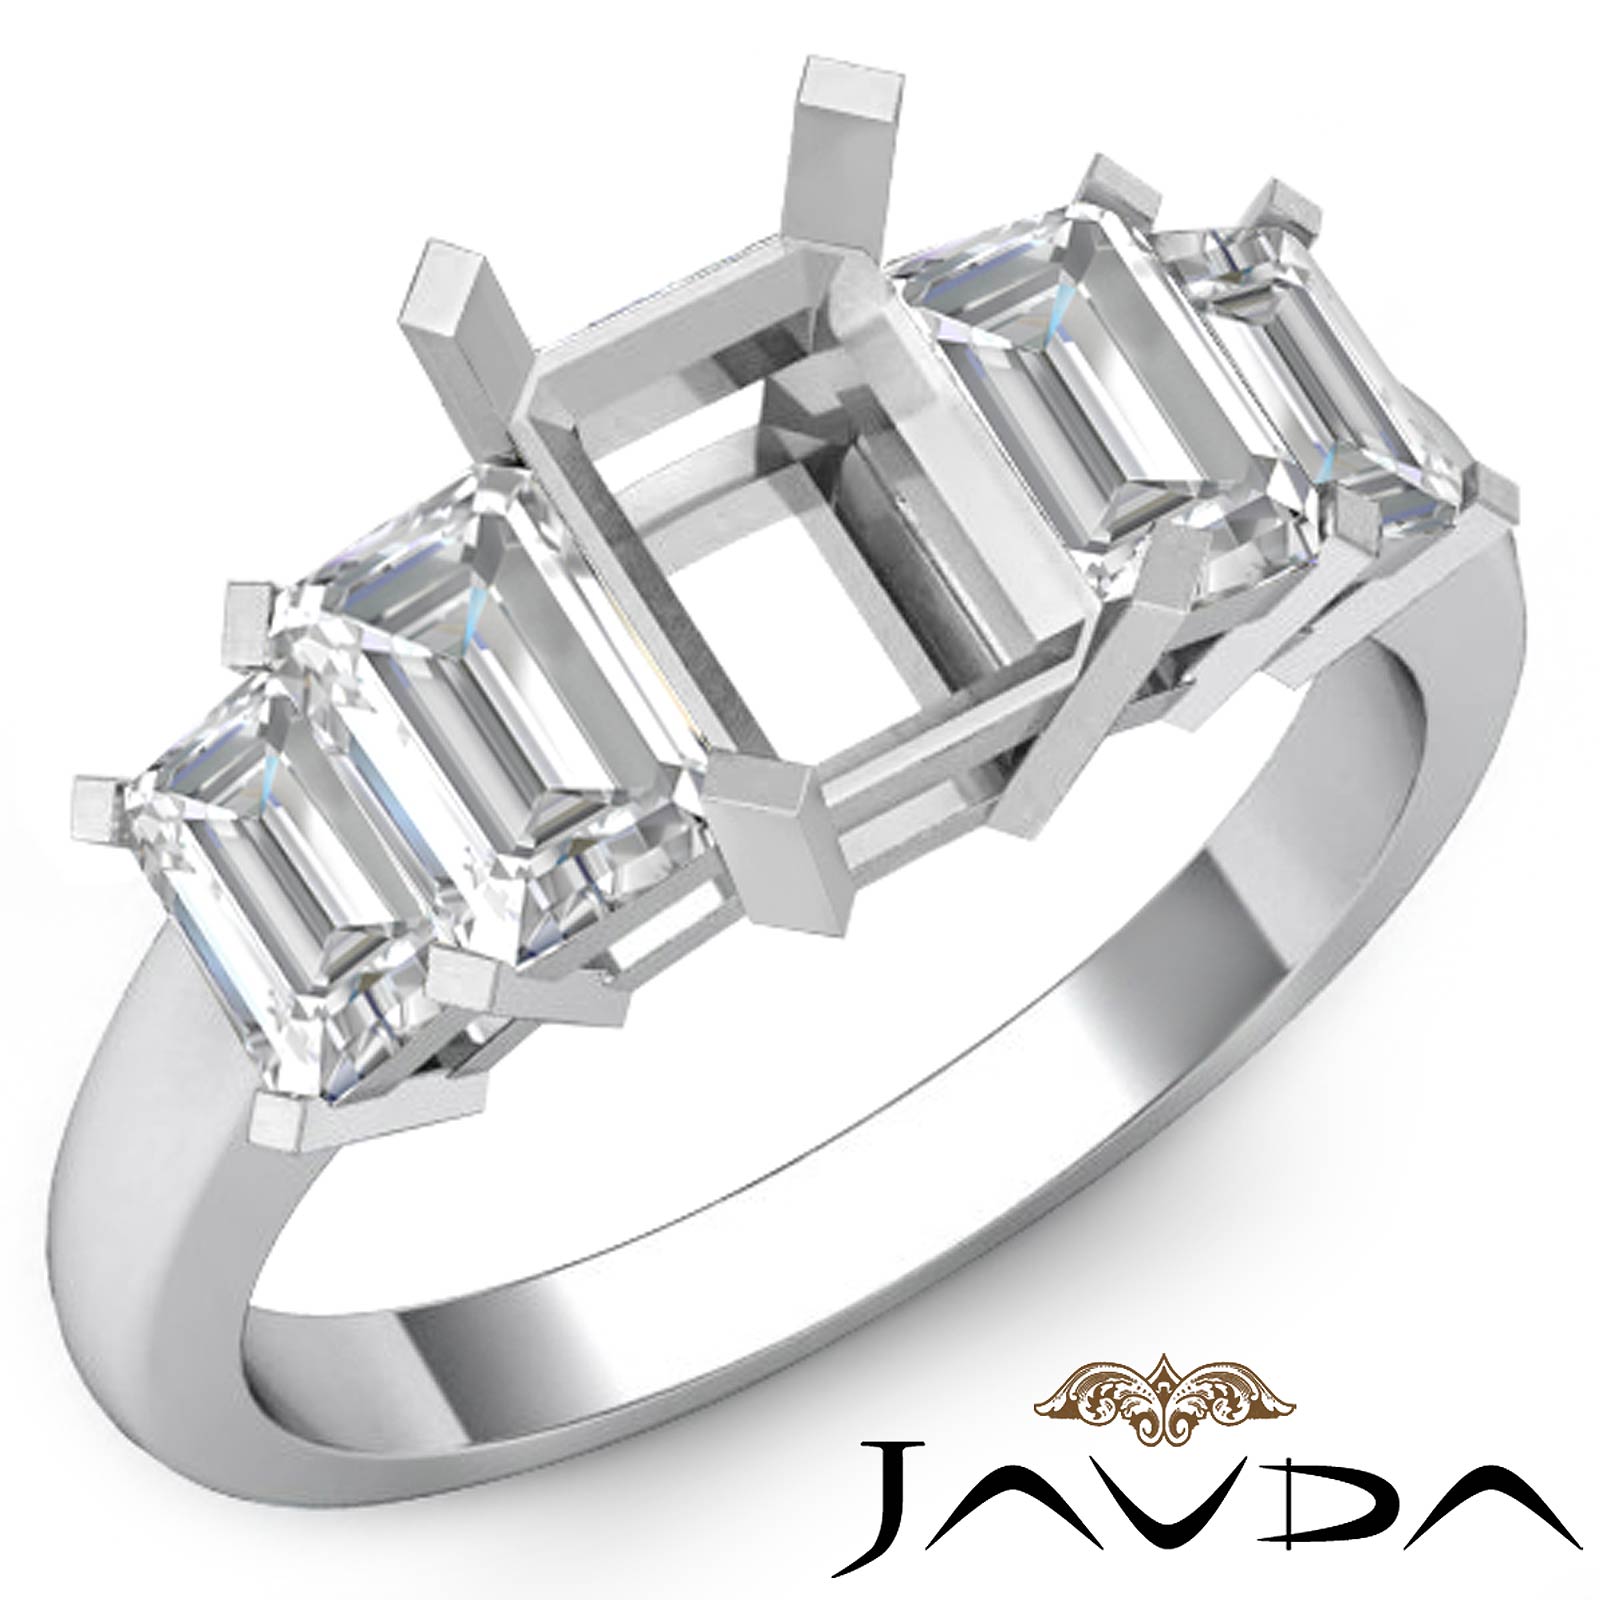 Engagement & Wedding Prong Set Ring 2.11 Ct Princess Cut Diamond 14k White Gold